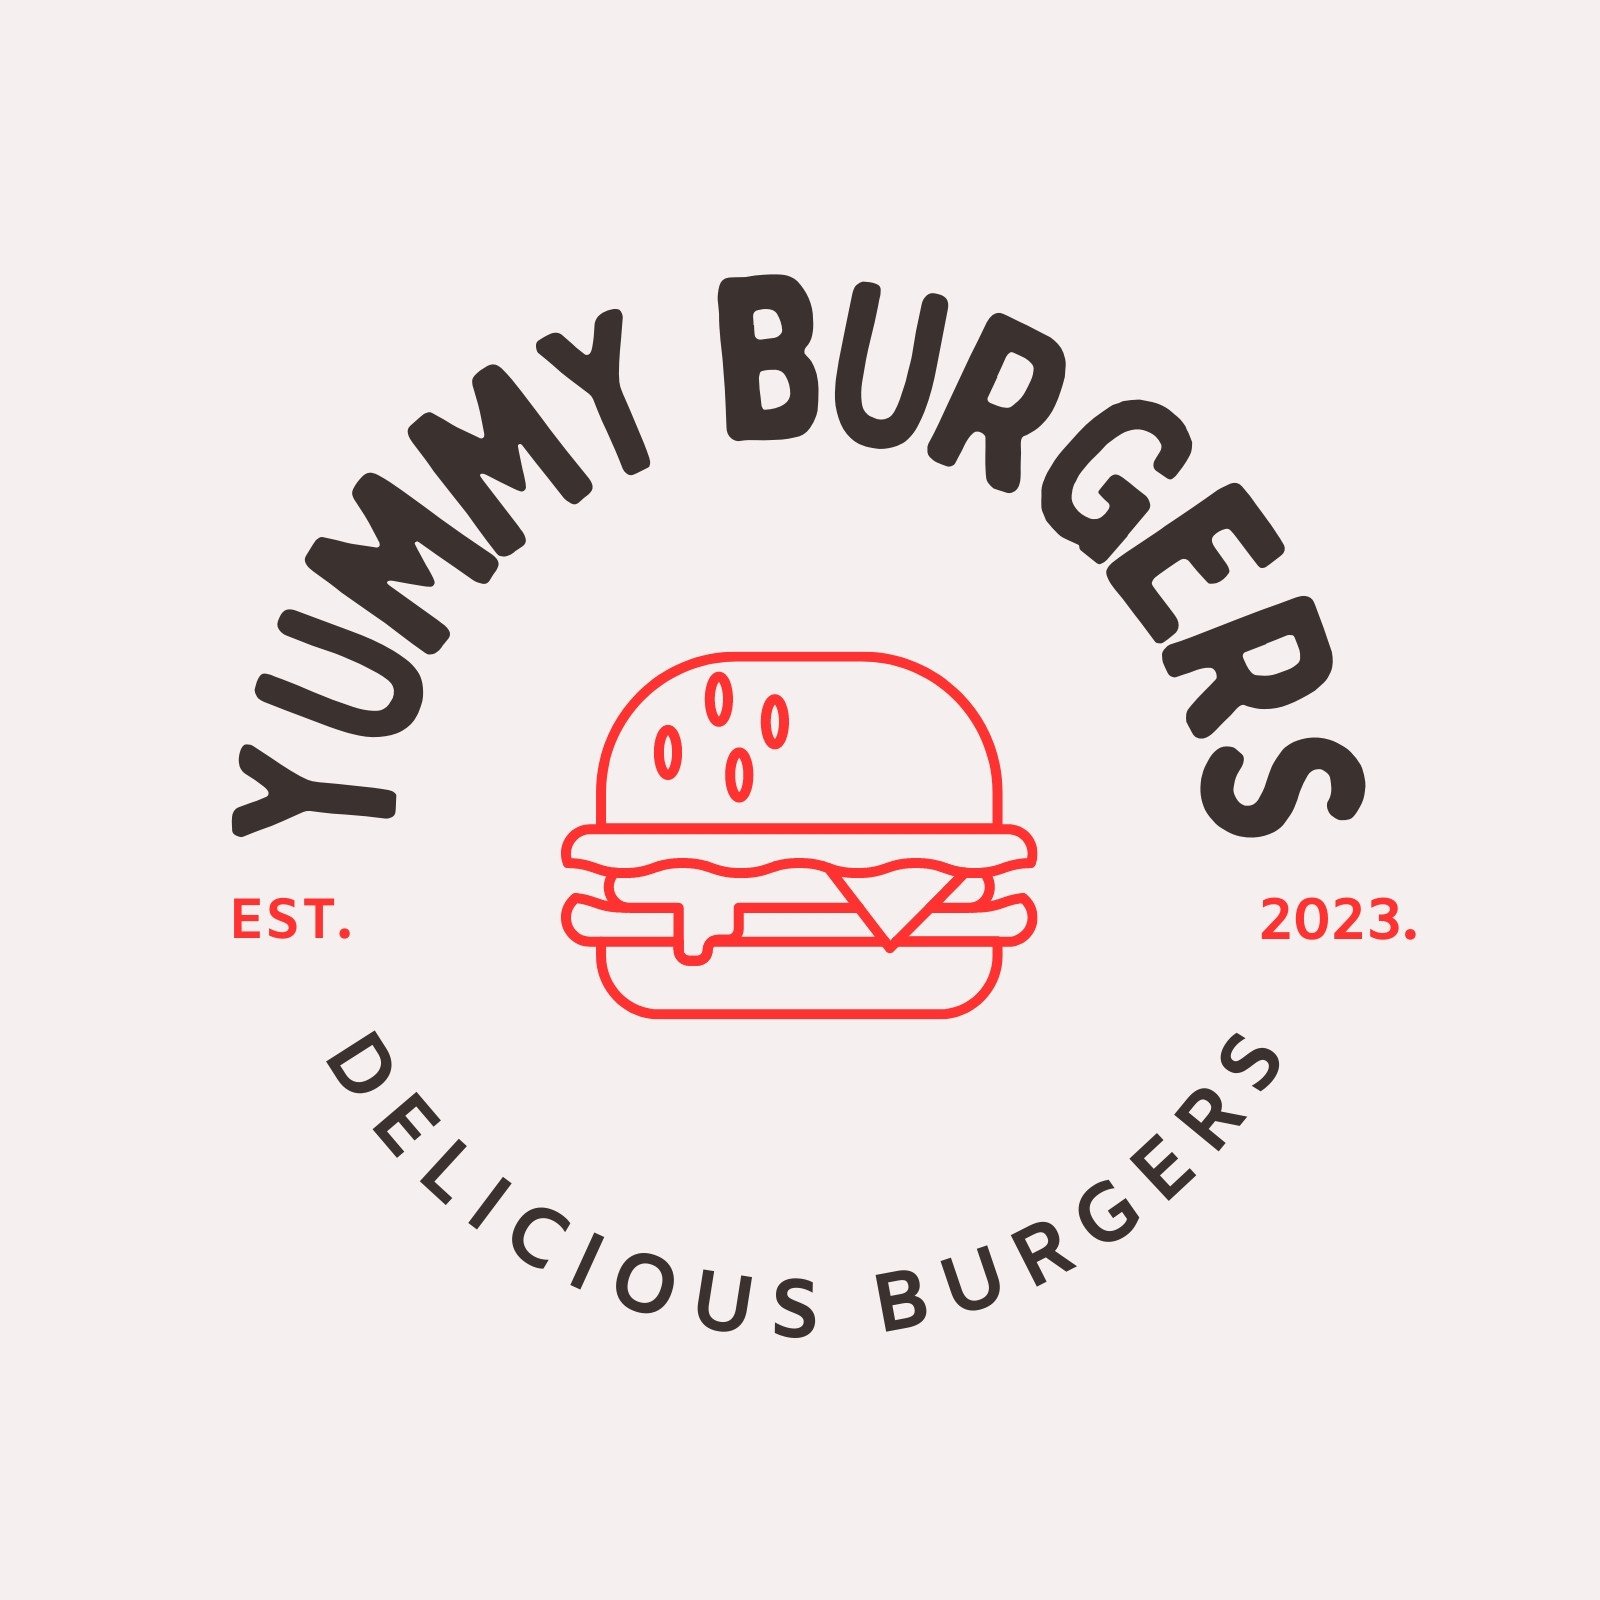 Fast Food Burger Logo PNG Images | PNG Free Download - Pikbest